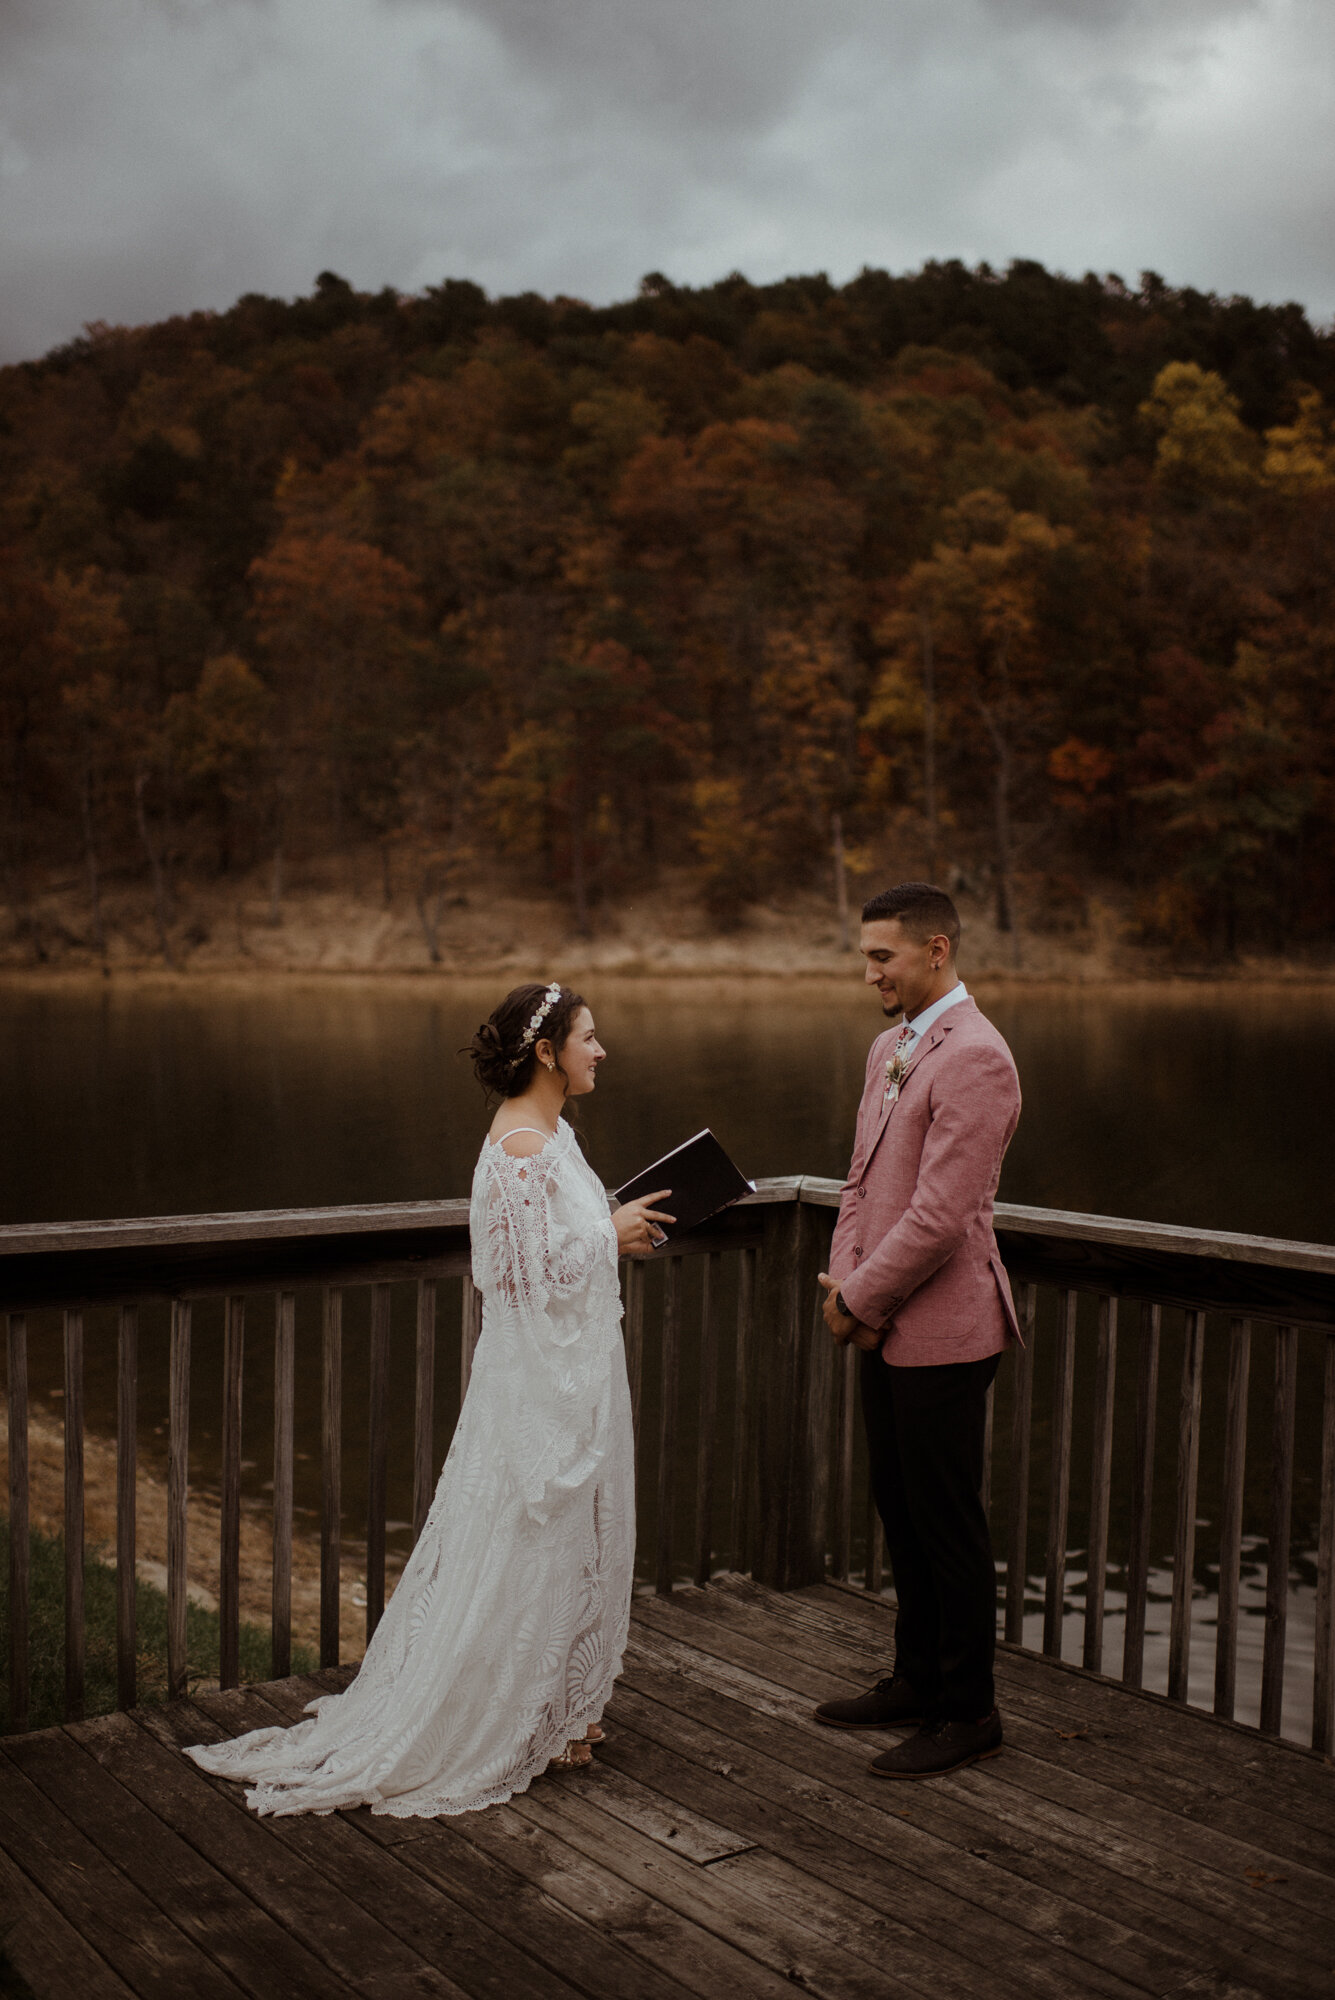 Antonia and Joey - Rainy Autumn Wedding - Small Virginia Wedding - White Sails Creative Photography_35.jpg